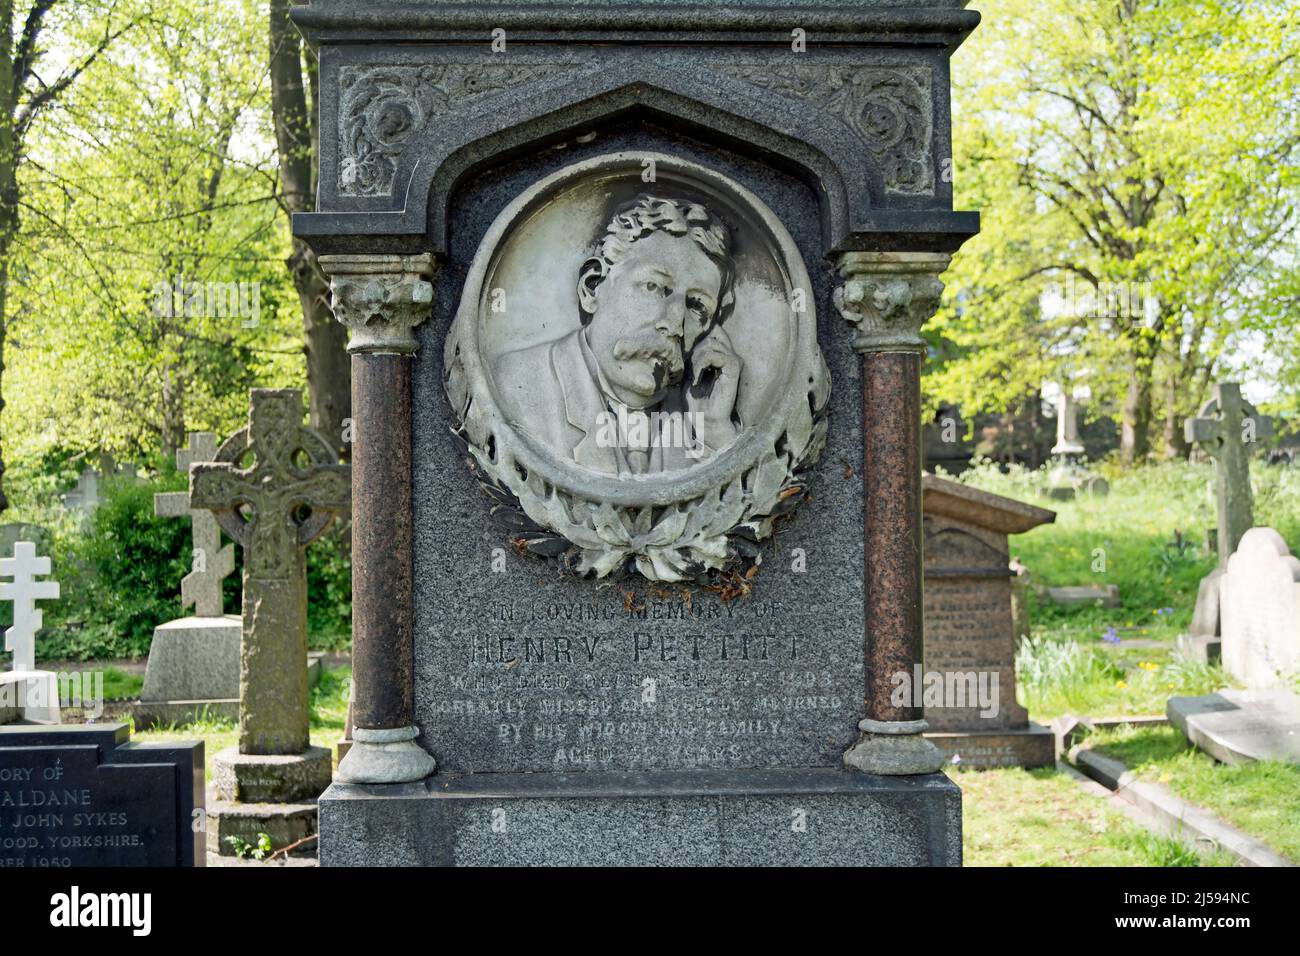 gedenkstätte mit Porträt des Grabes des Dramatikers aus dem 19.. Jahrhundert, henry pettitt, brompton Friedhof, london, england Stockfoto